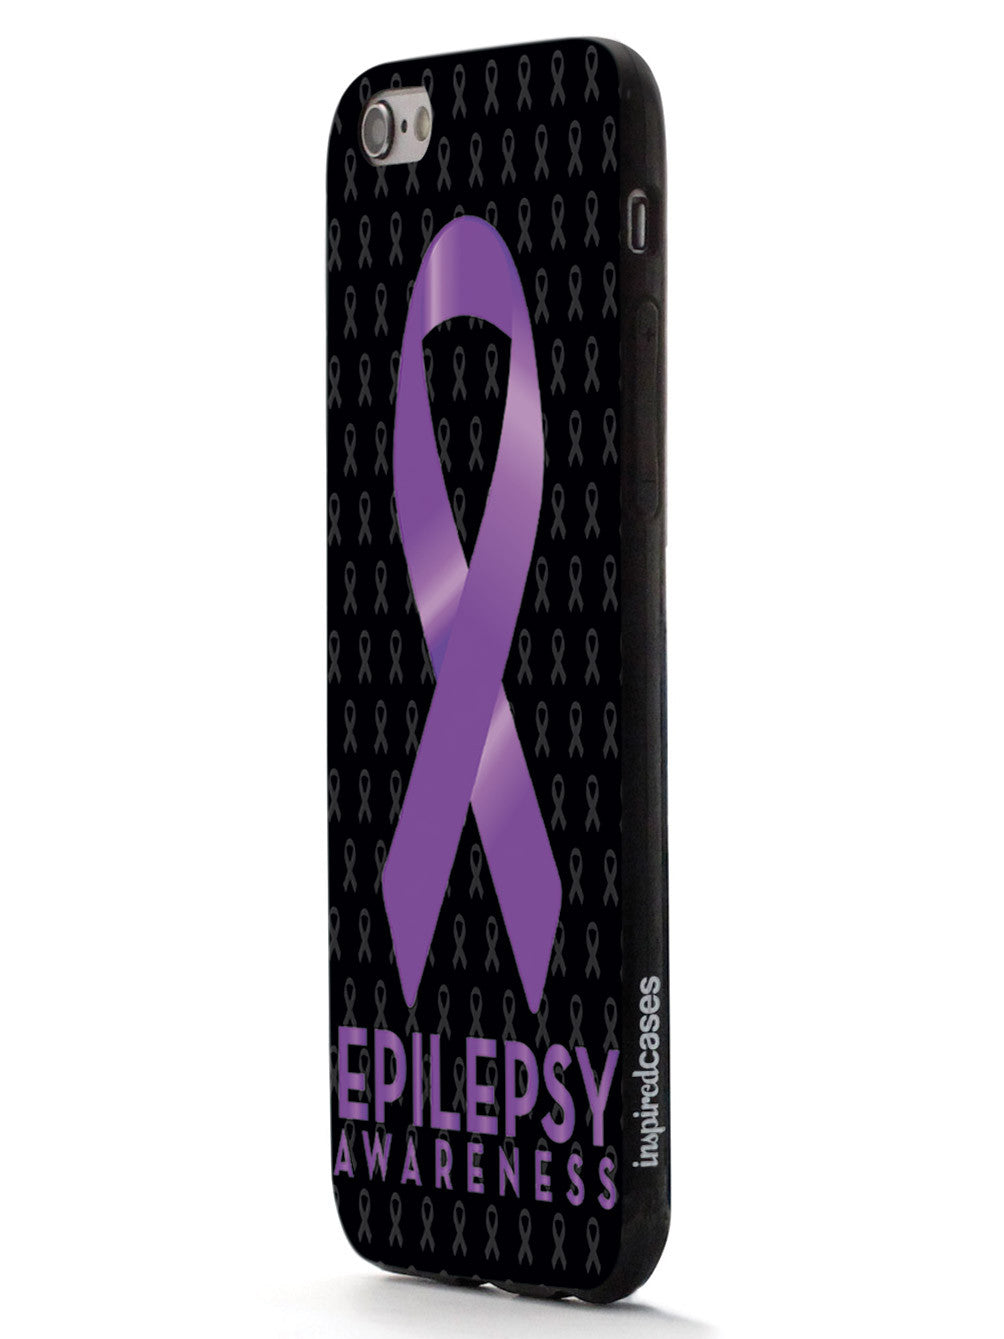 Epilepsy Awareness - Black Case